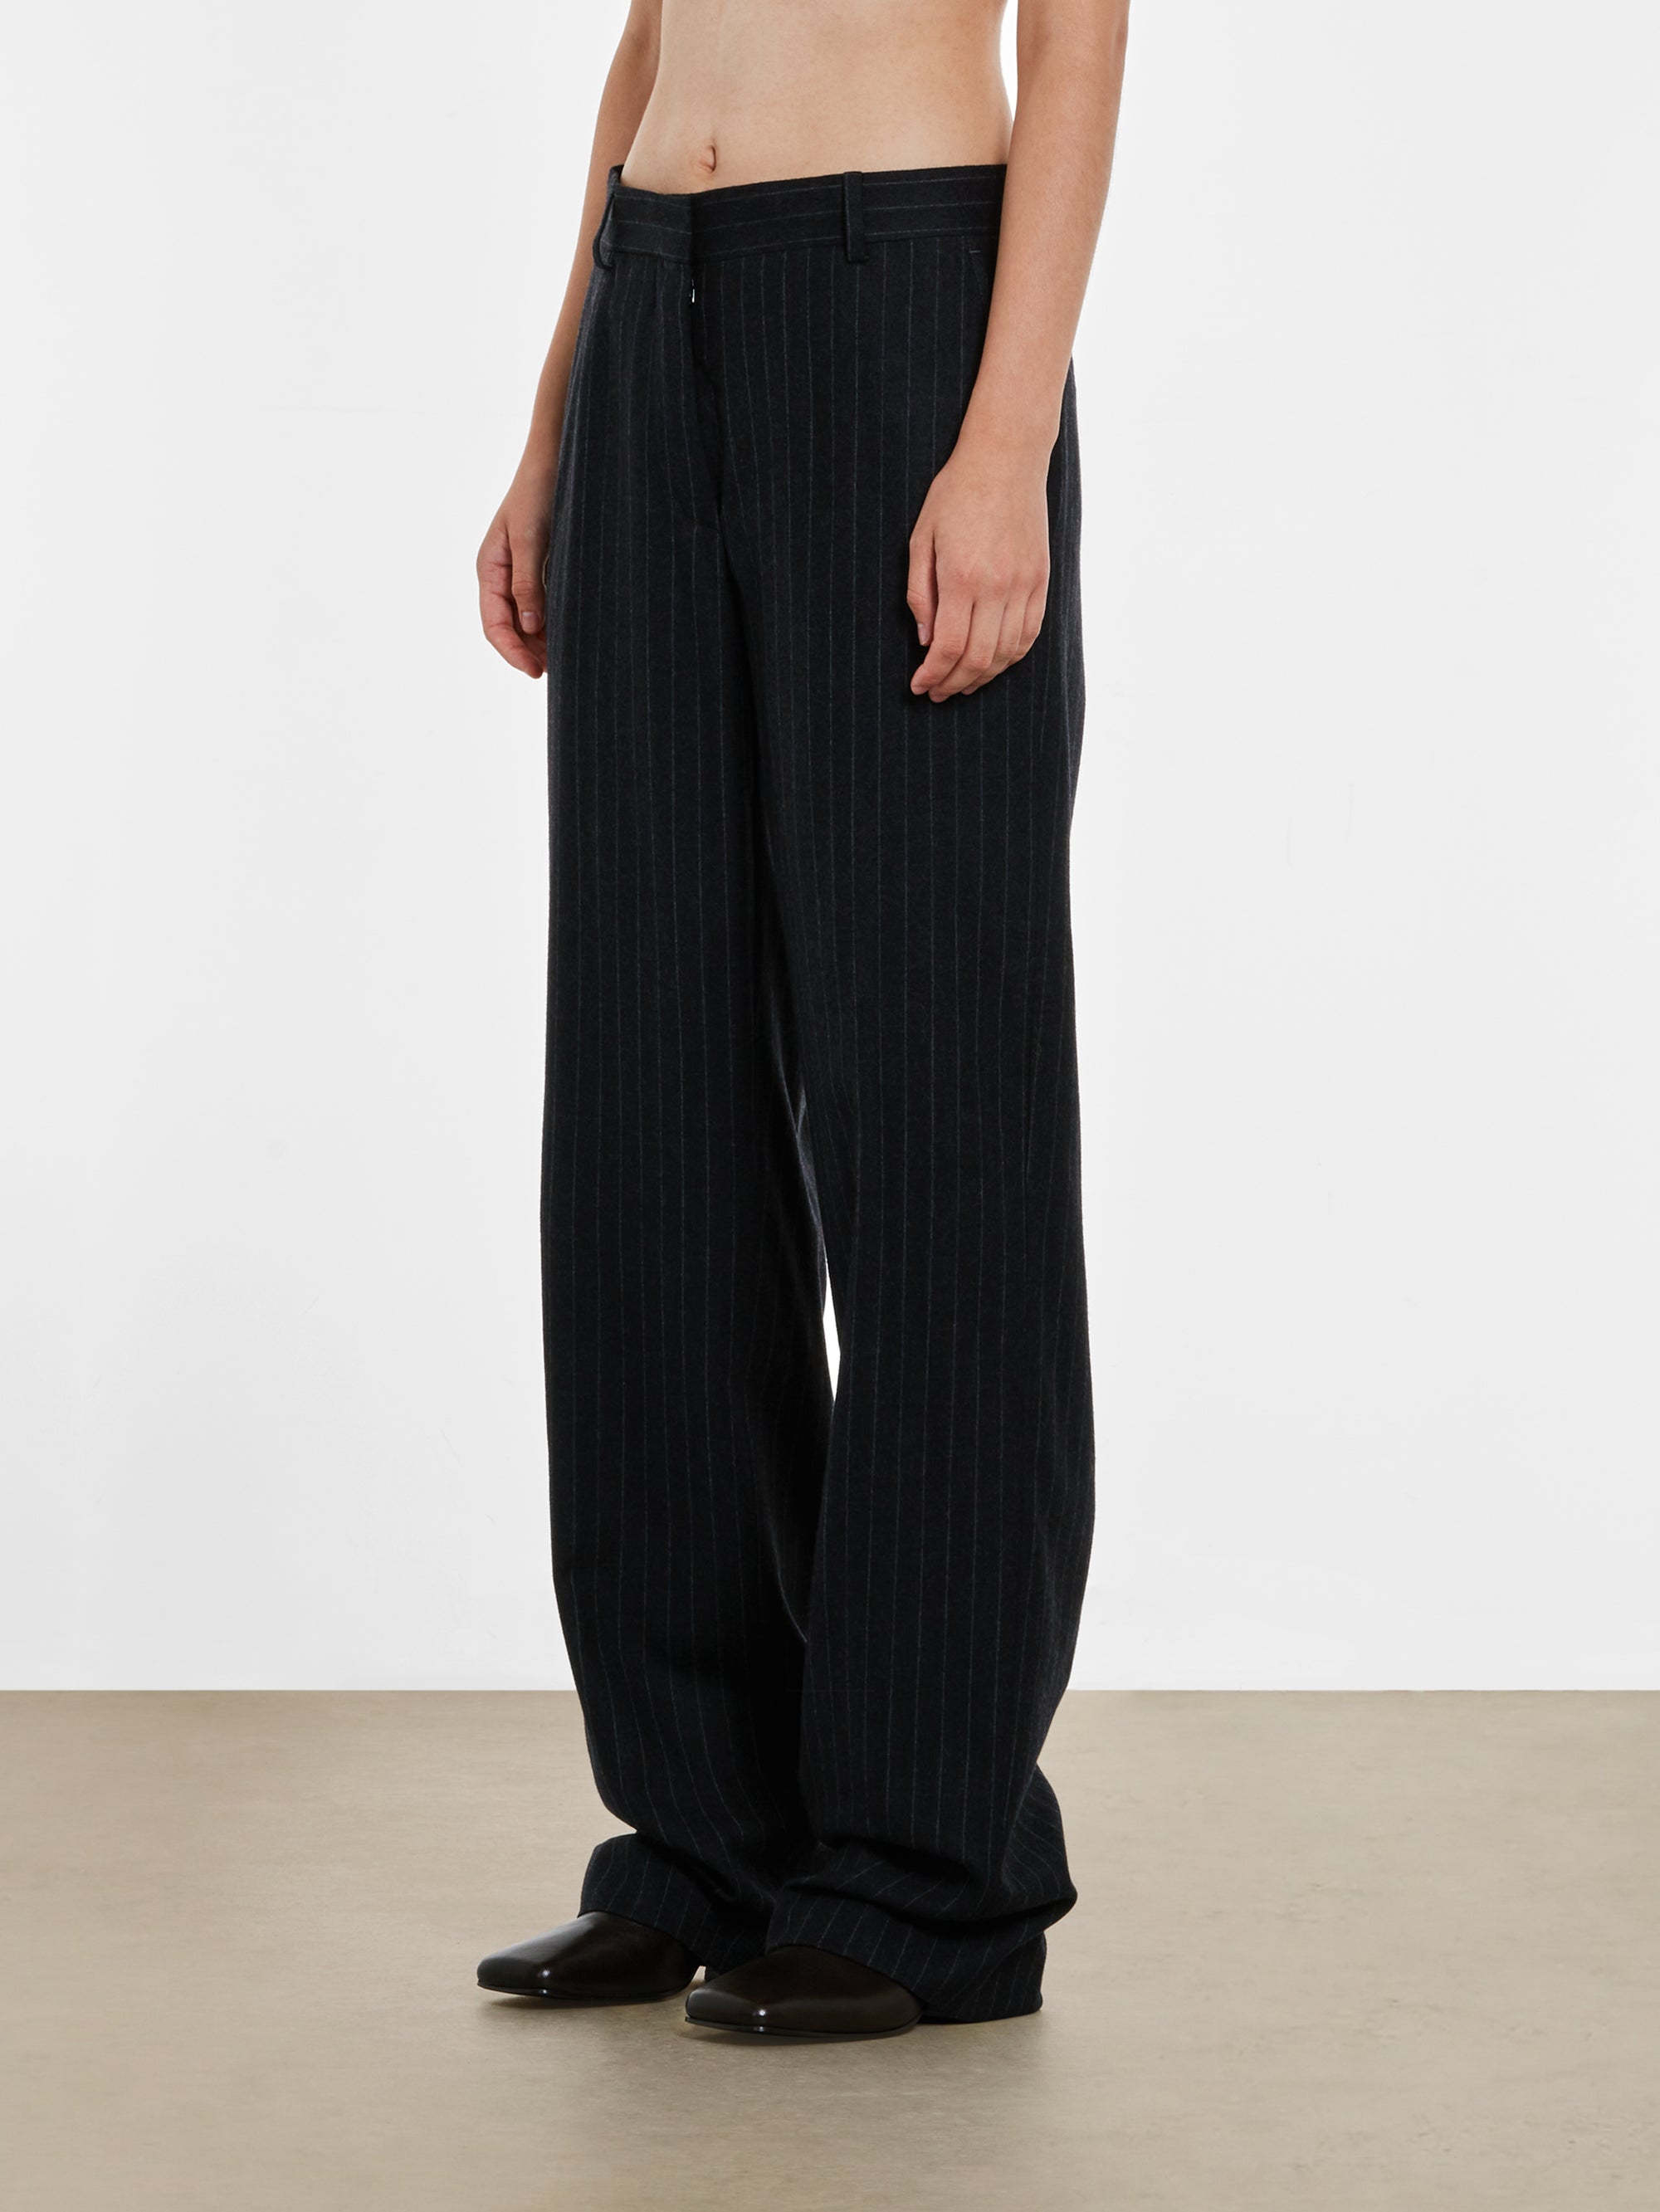 Dries Van Noten - Women’s Tailored Pant - (Anthracite) view 2